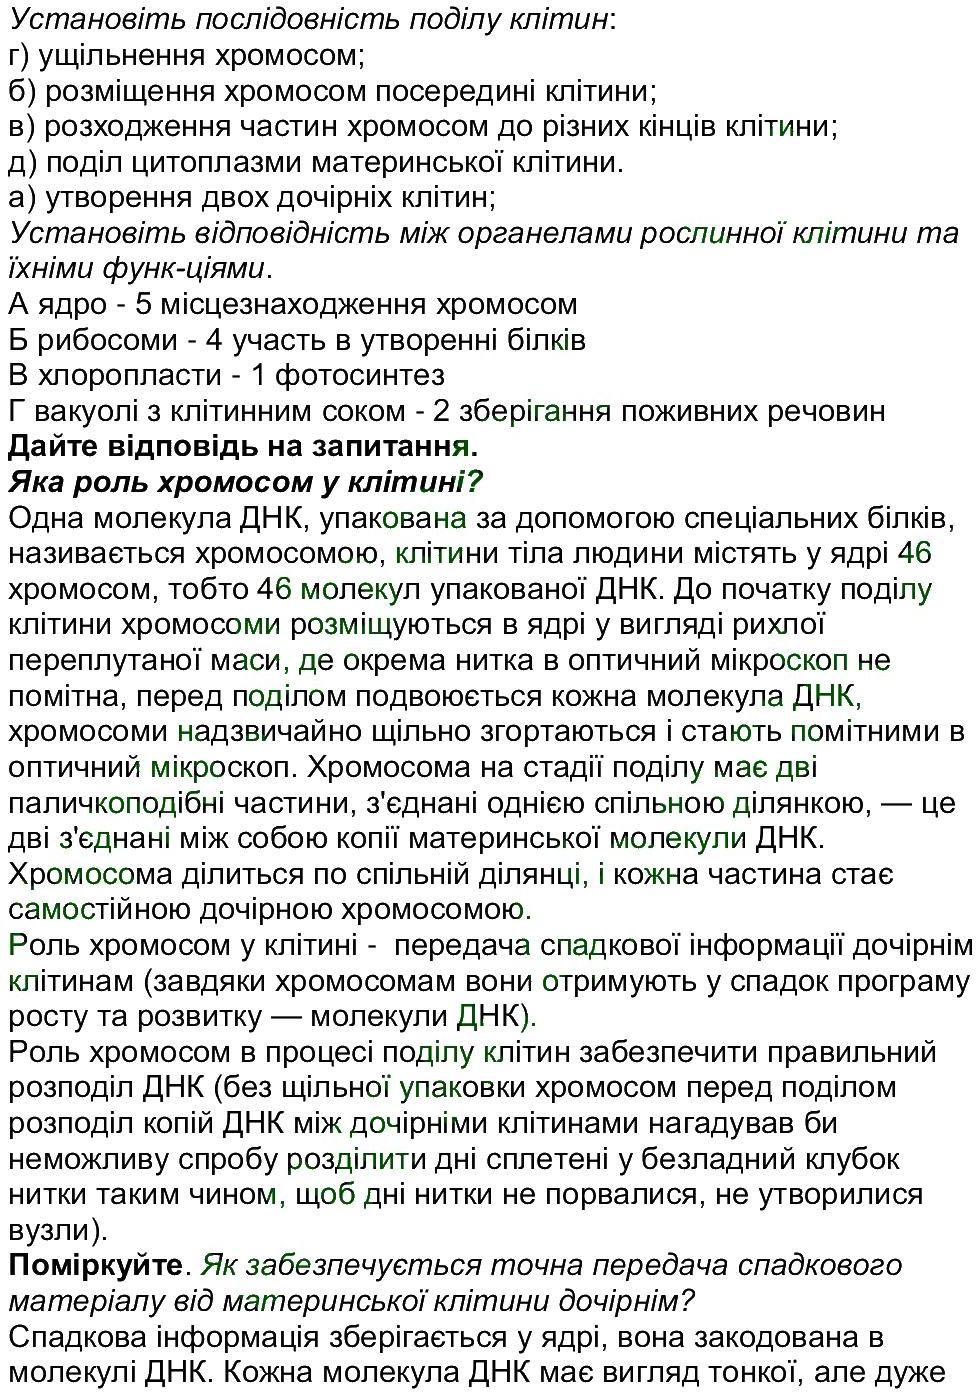 6-biologiya-li-ostapchenko-pg-balan-nyu-matyash-2016--tema-1-klitina-ст45-47-rnd7563.jpg